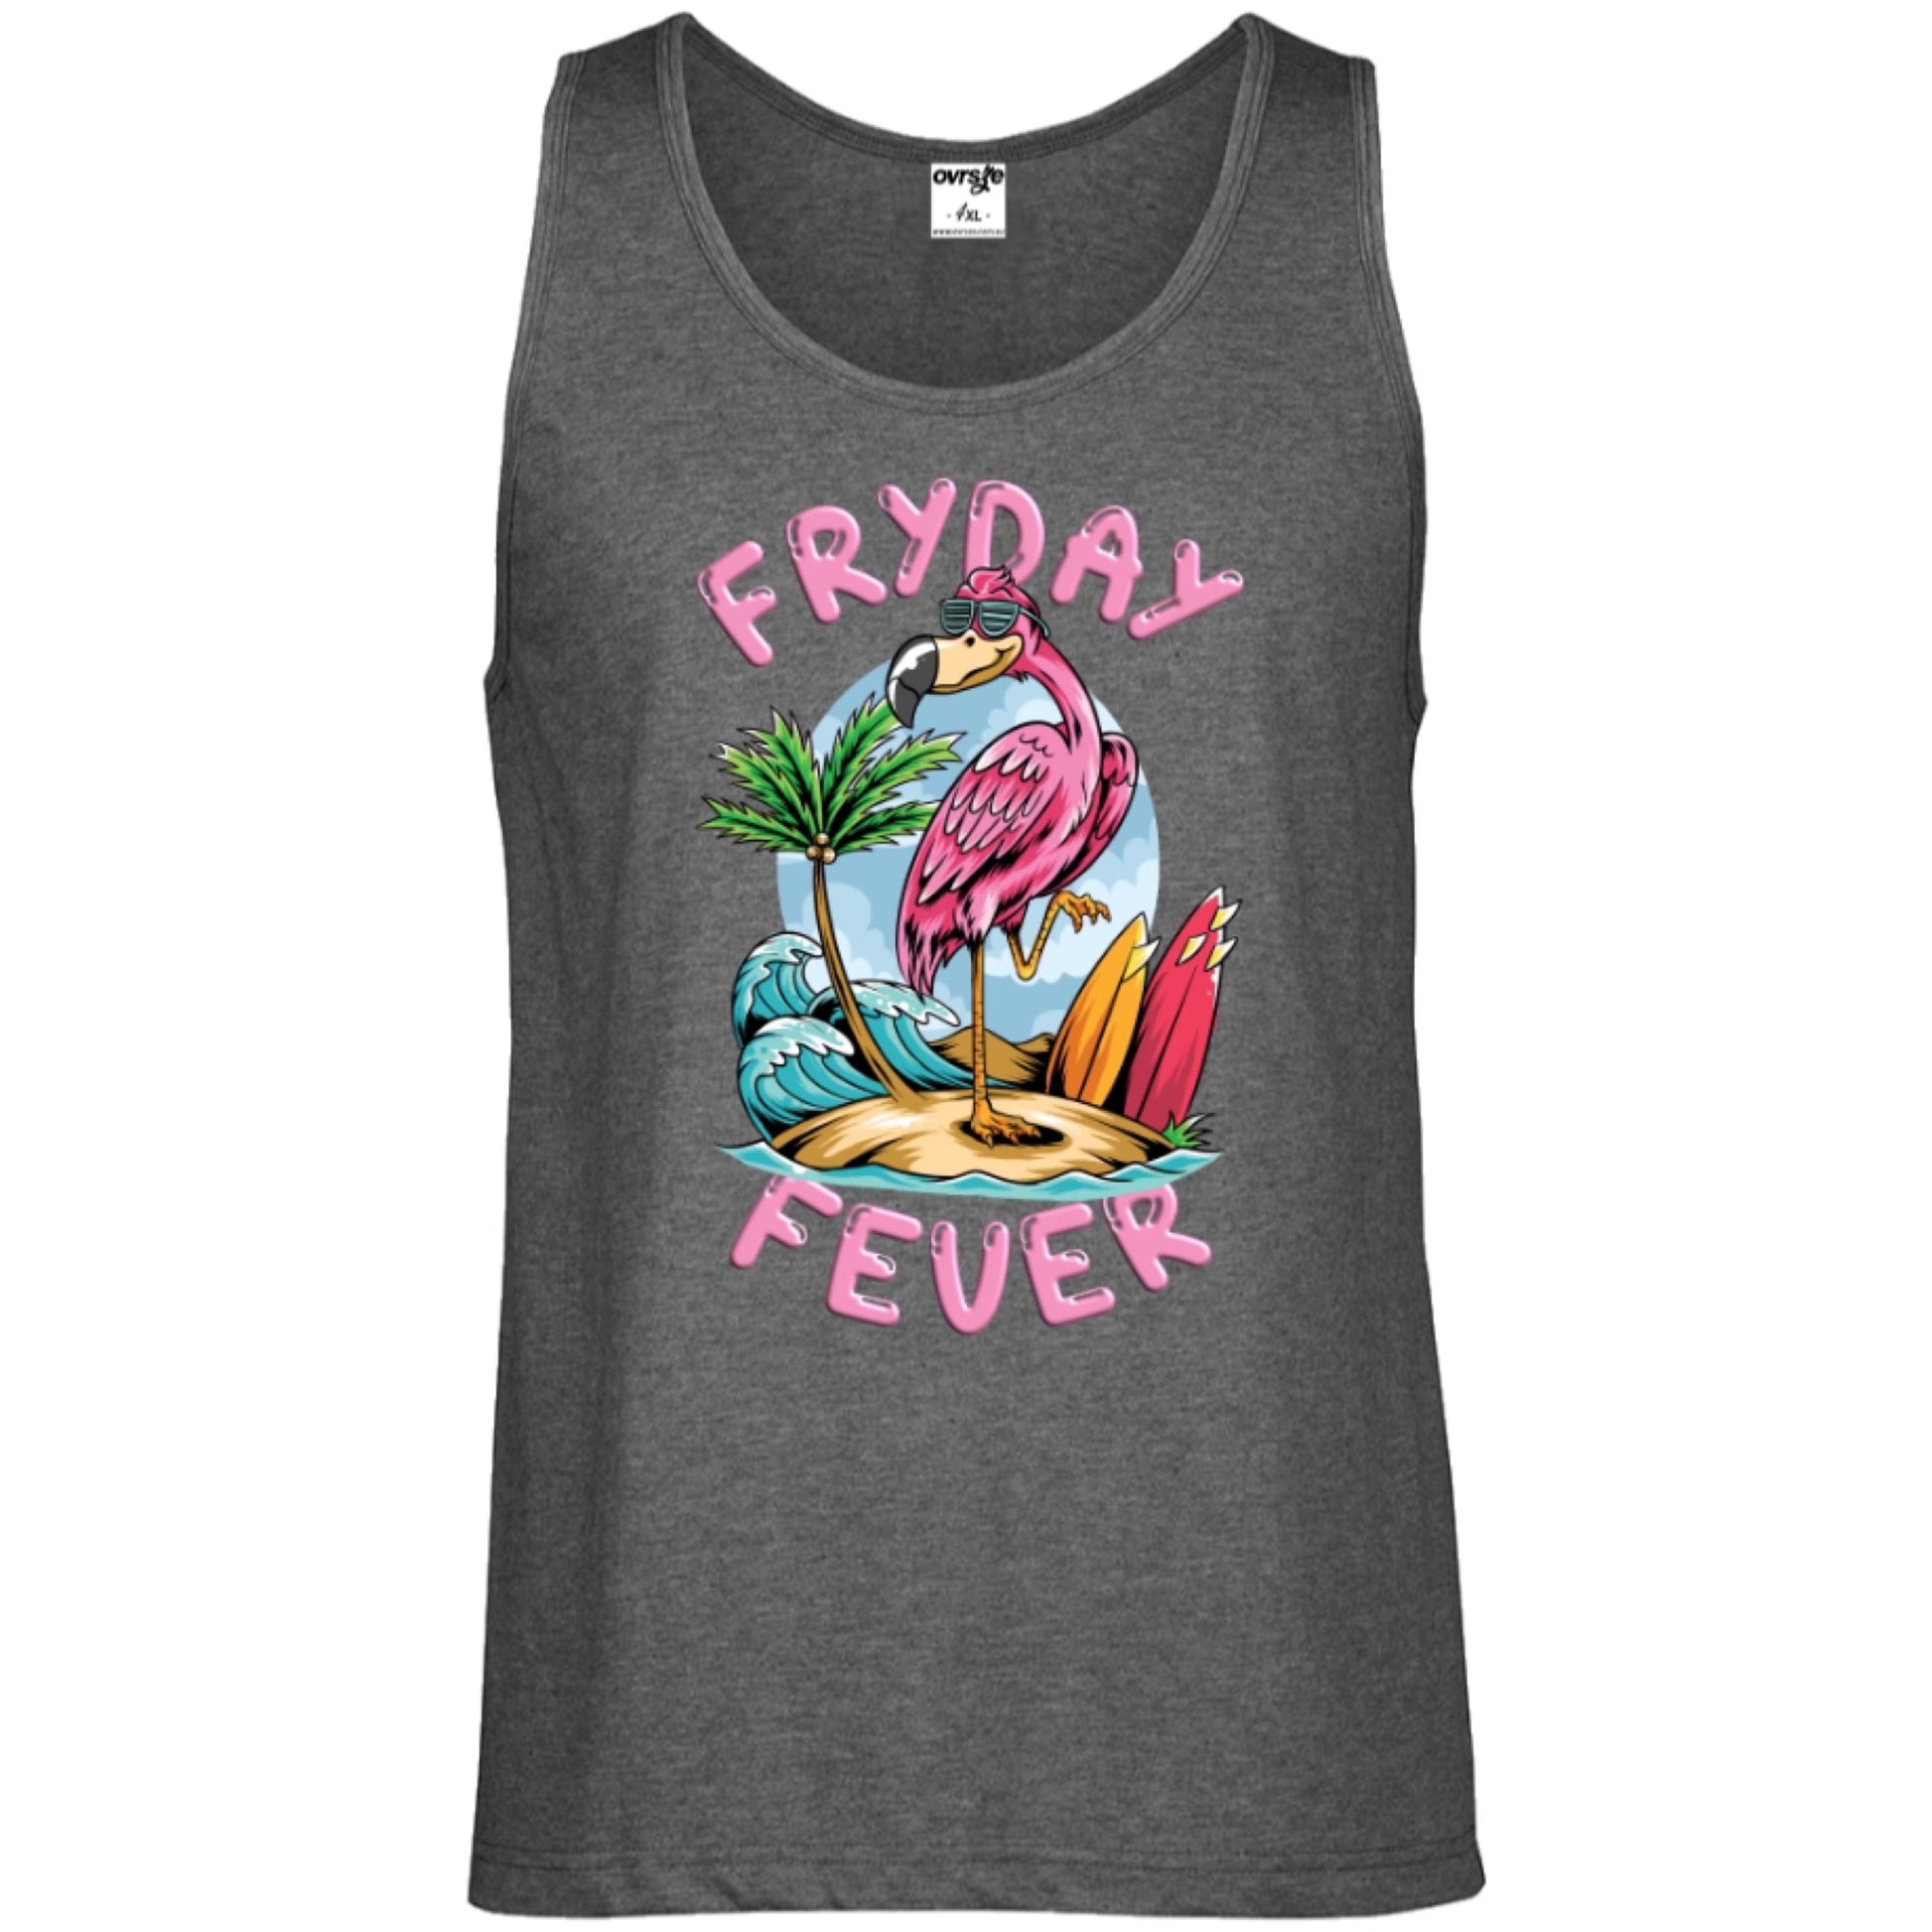 fryday fever [singlet] - ovrsze